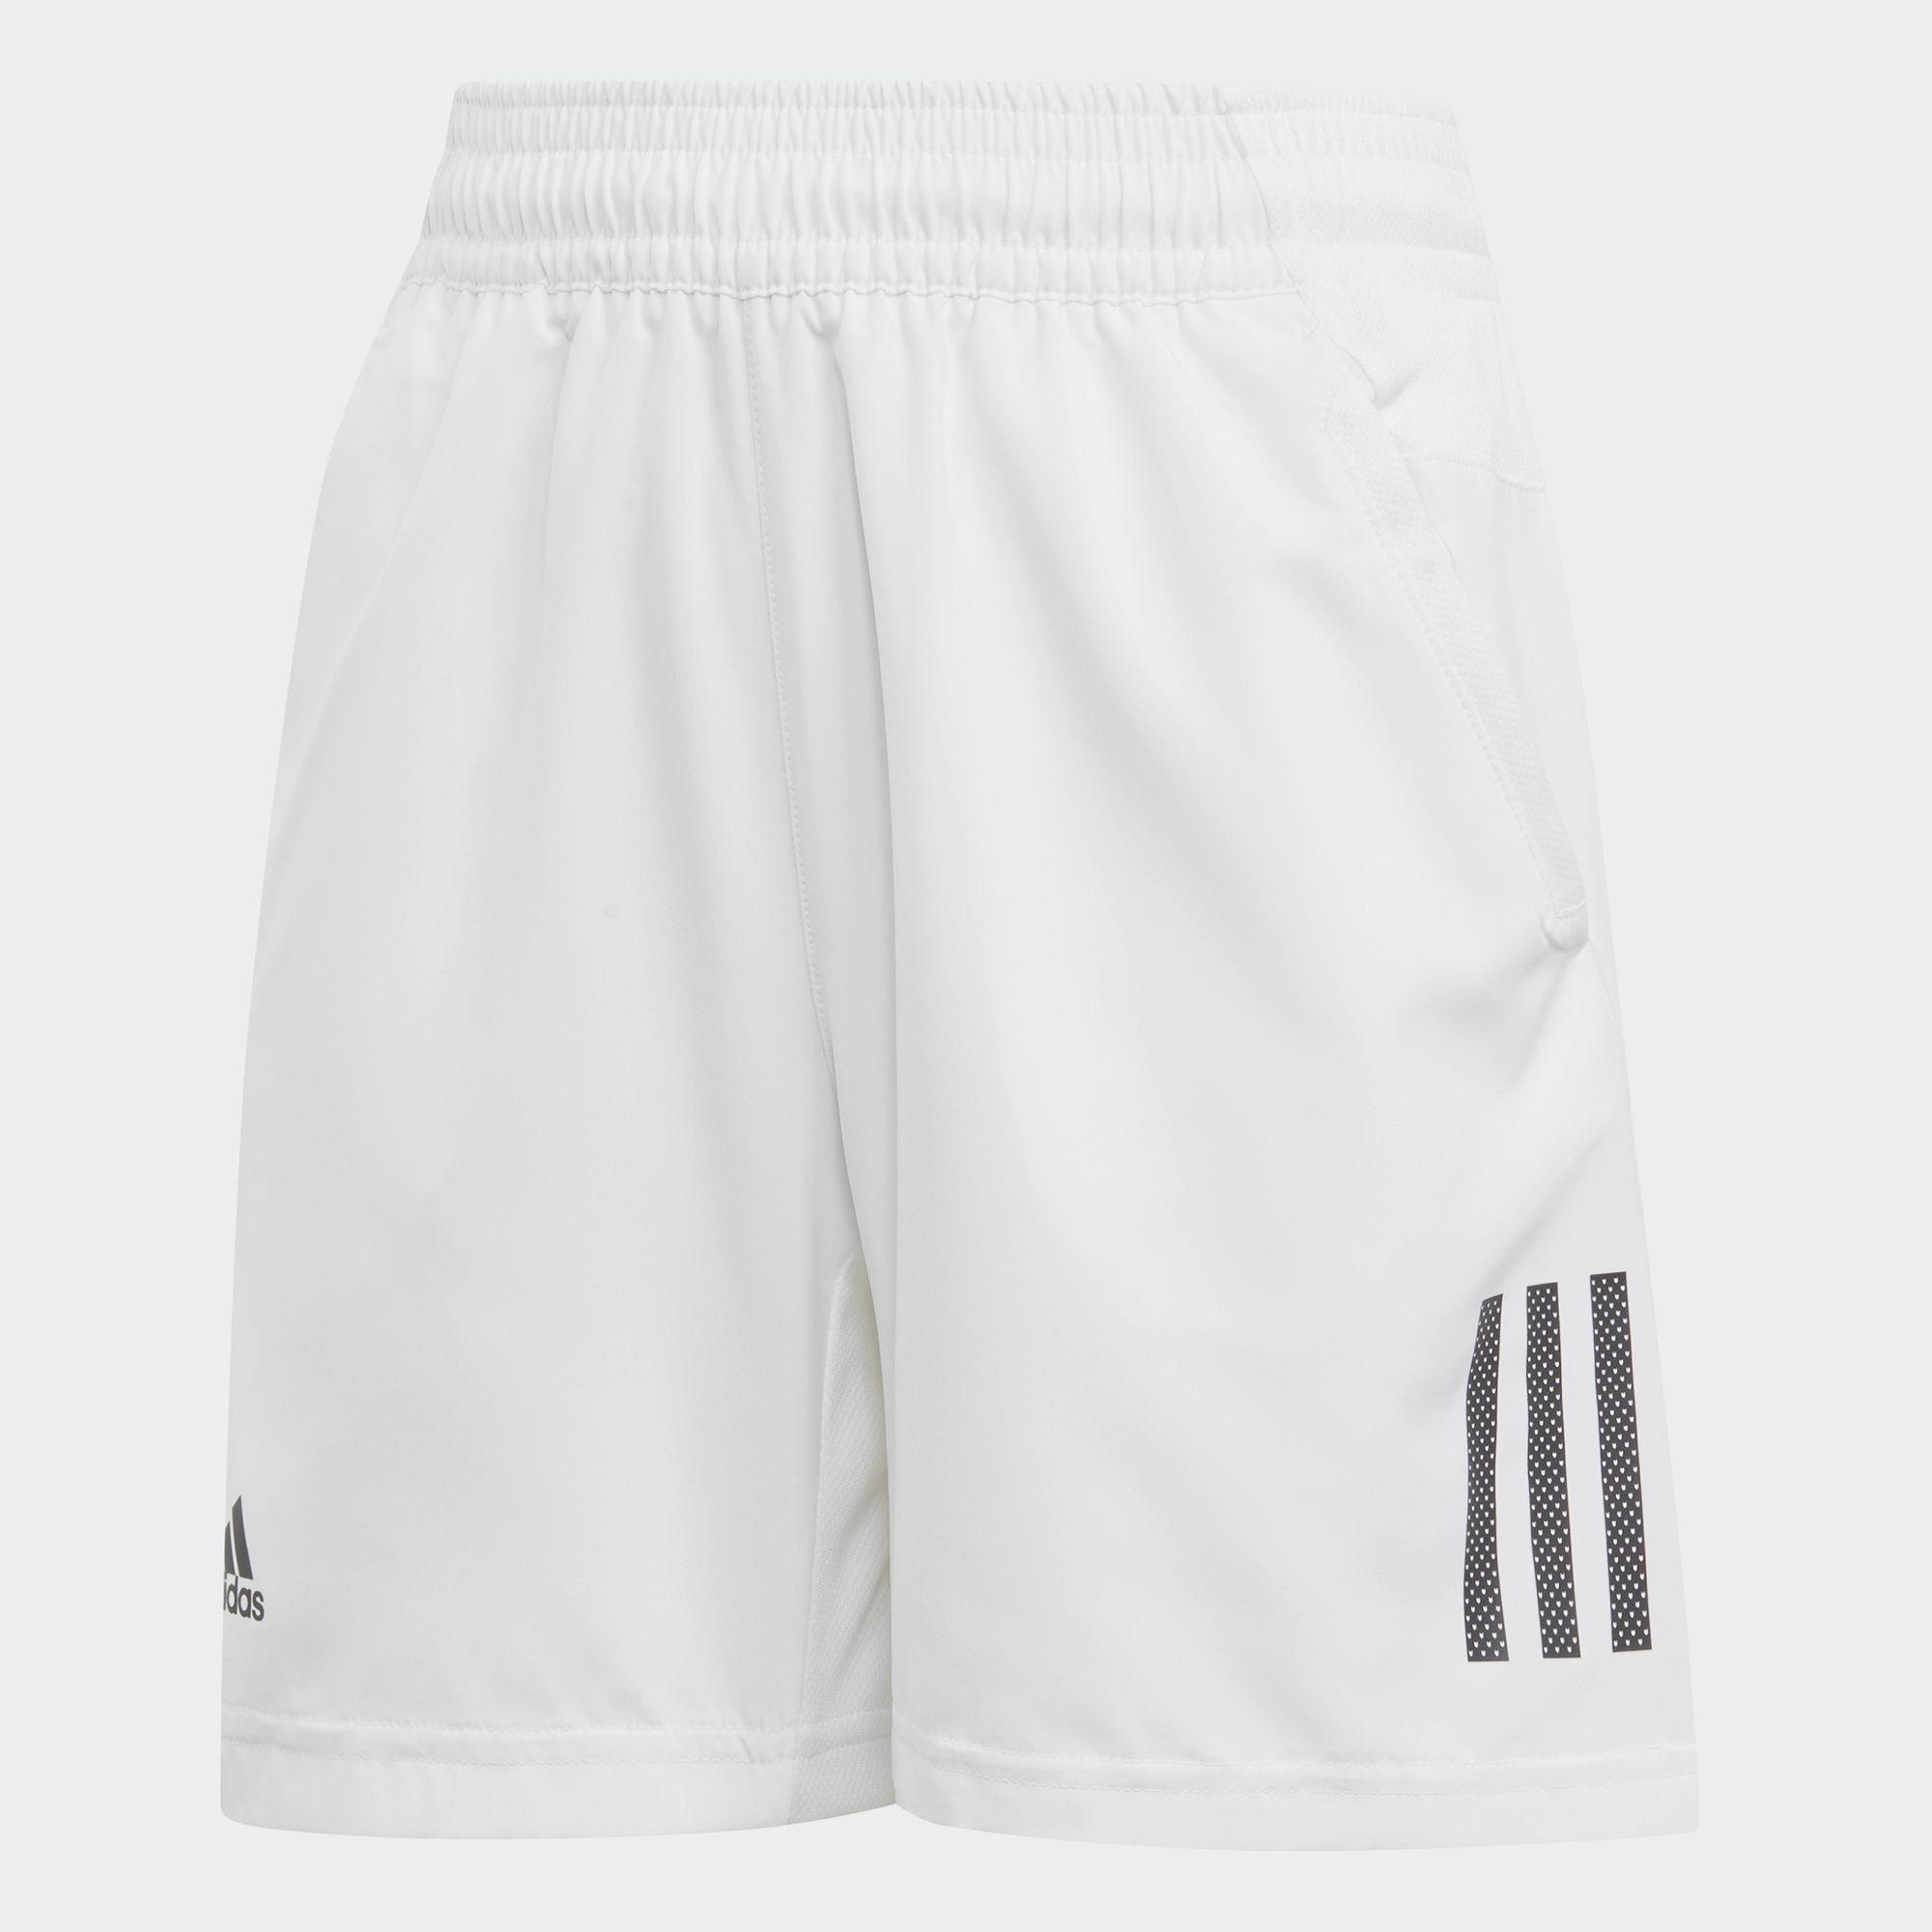 boys white adidas shorts